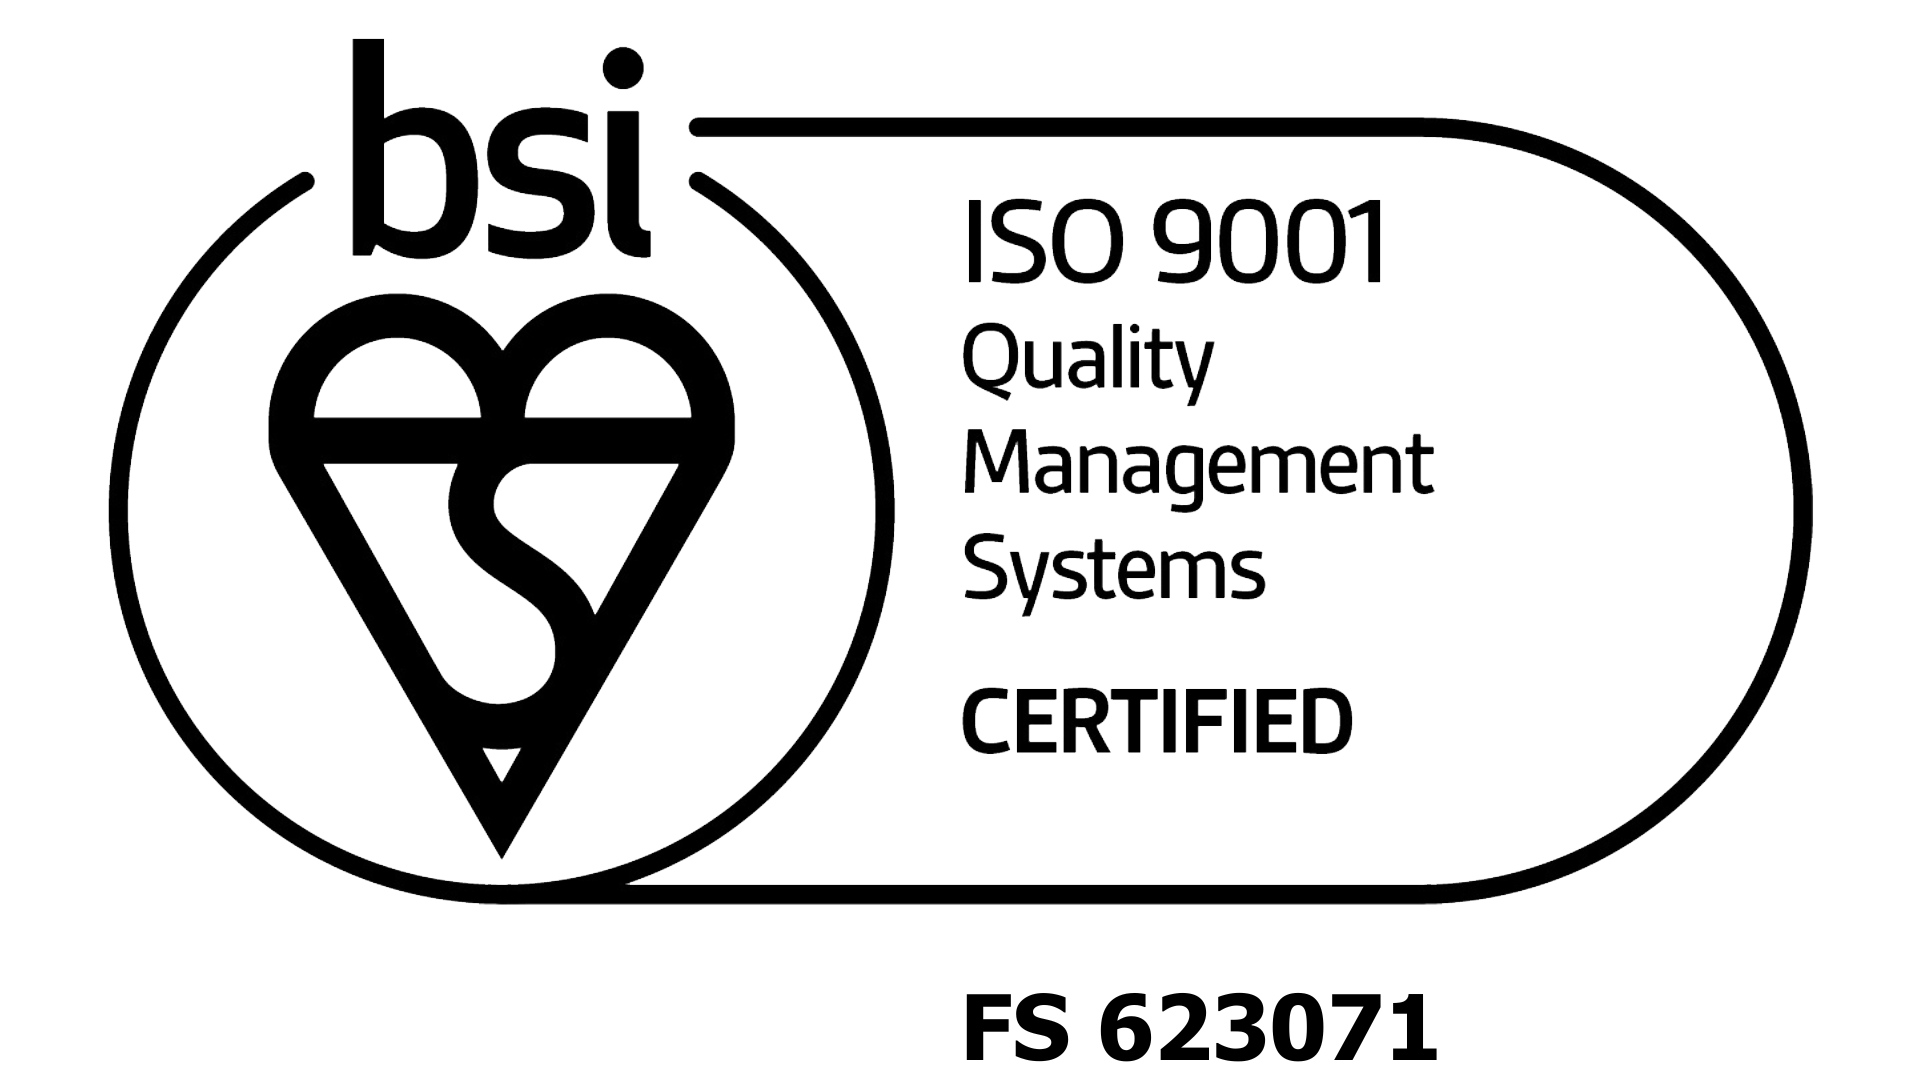 BSI ISO 9001 Certified logo